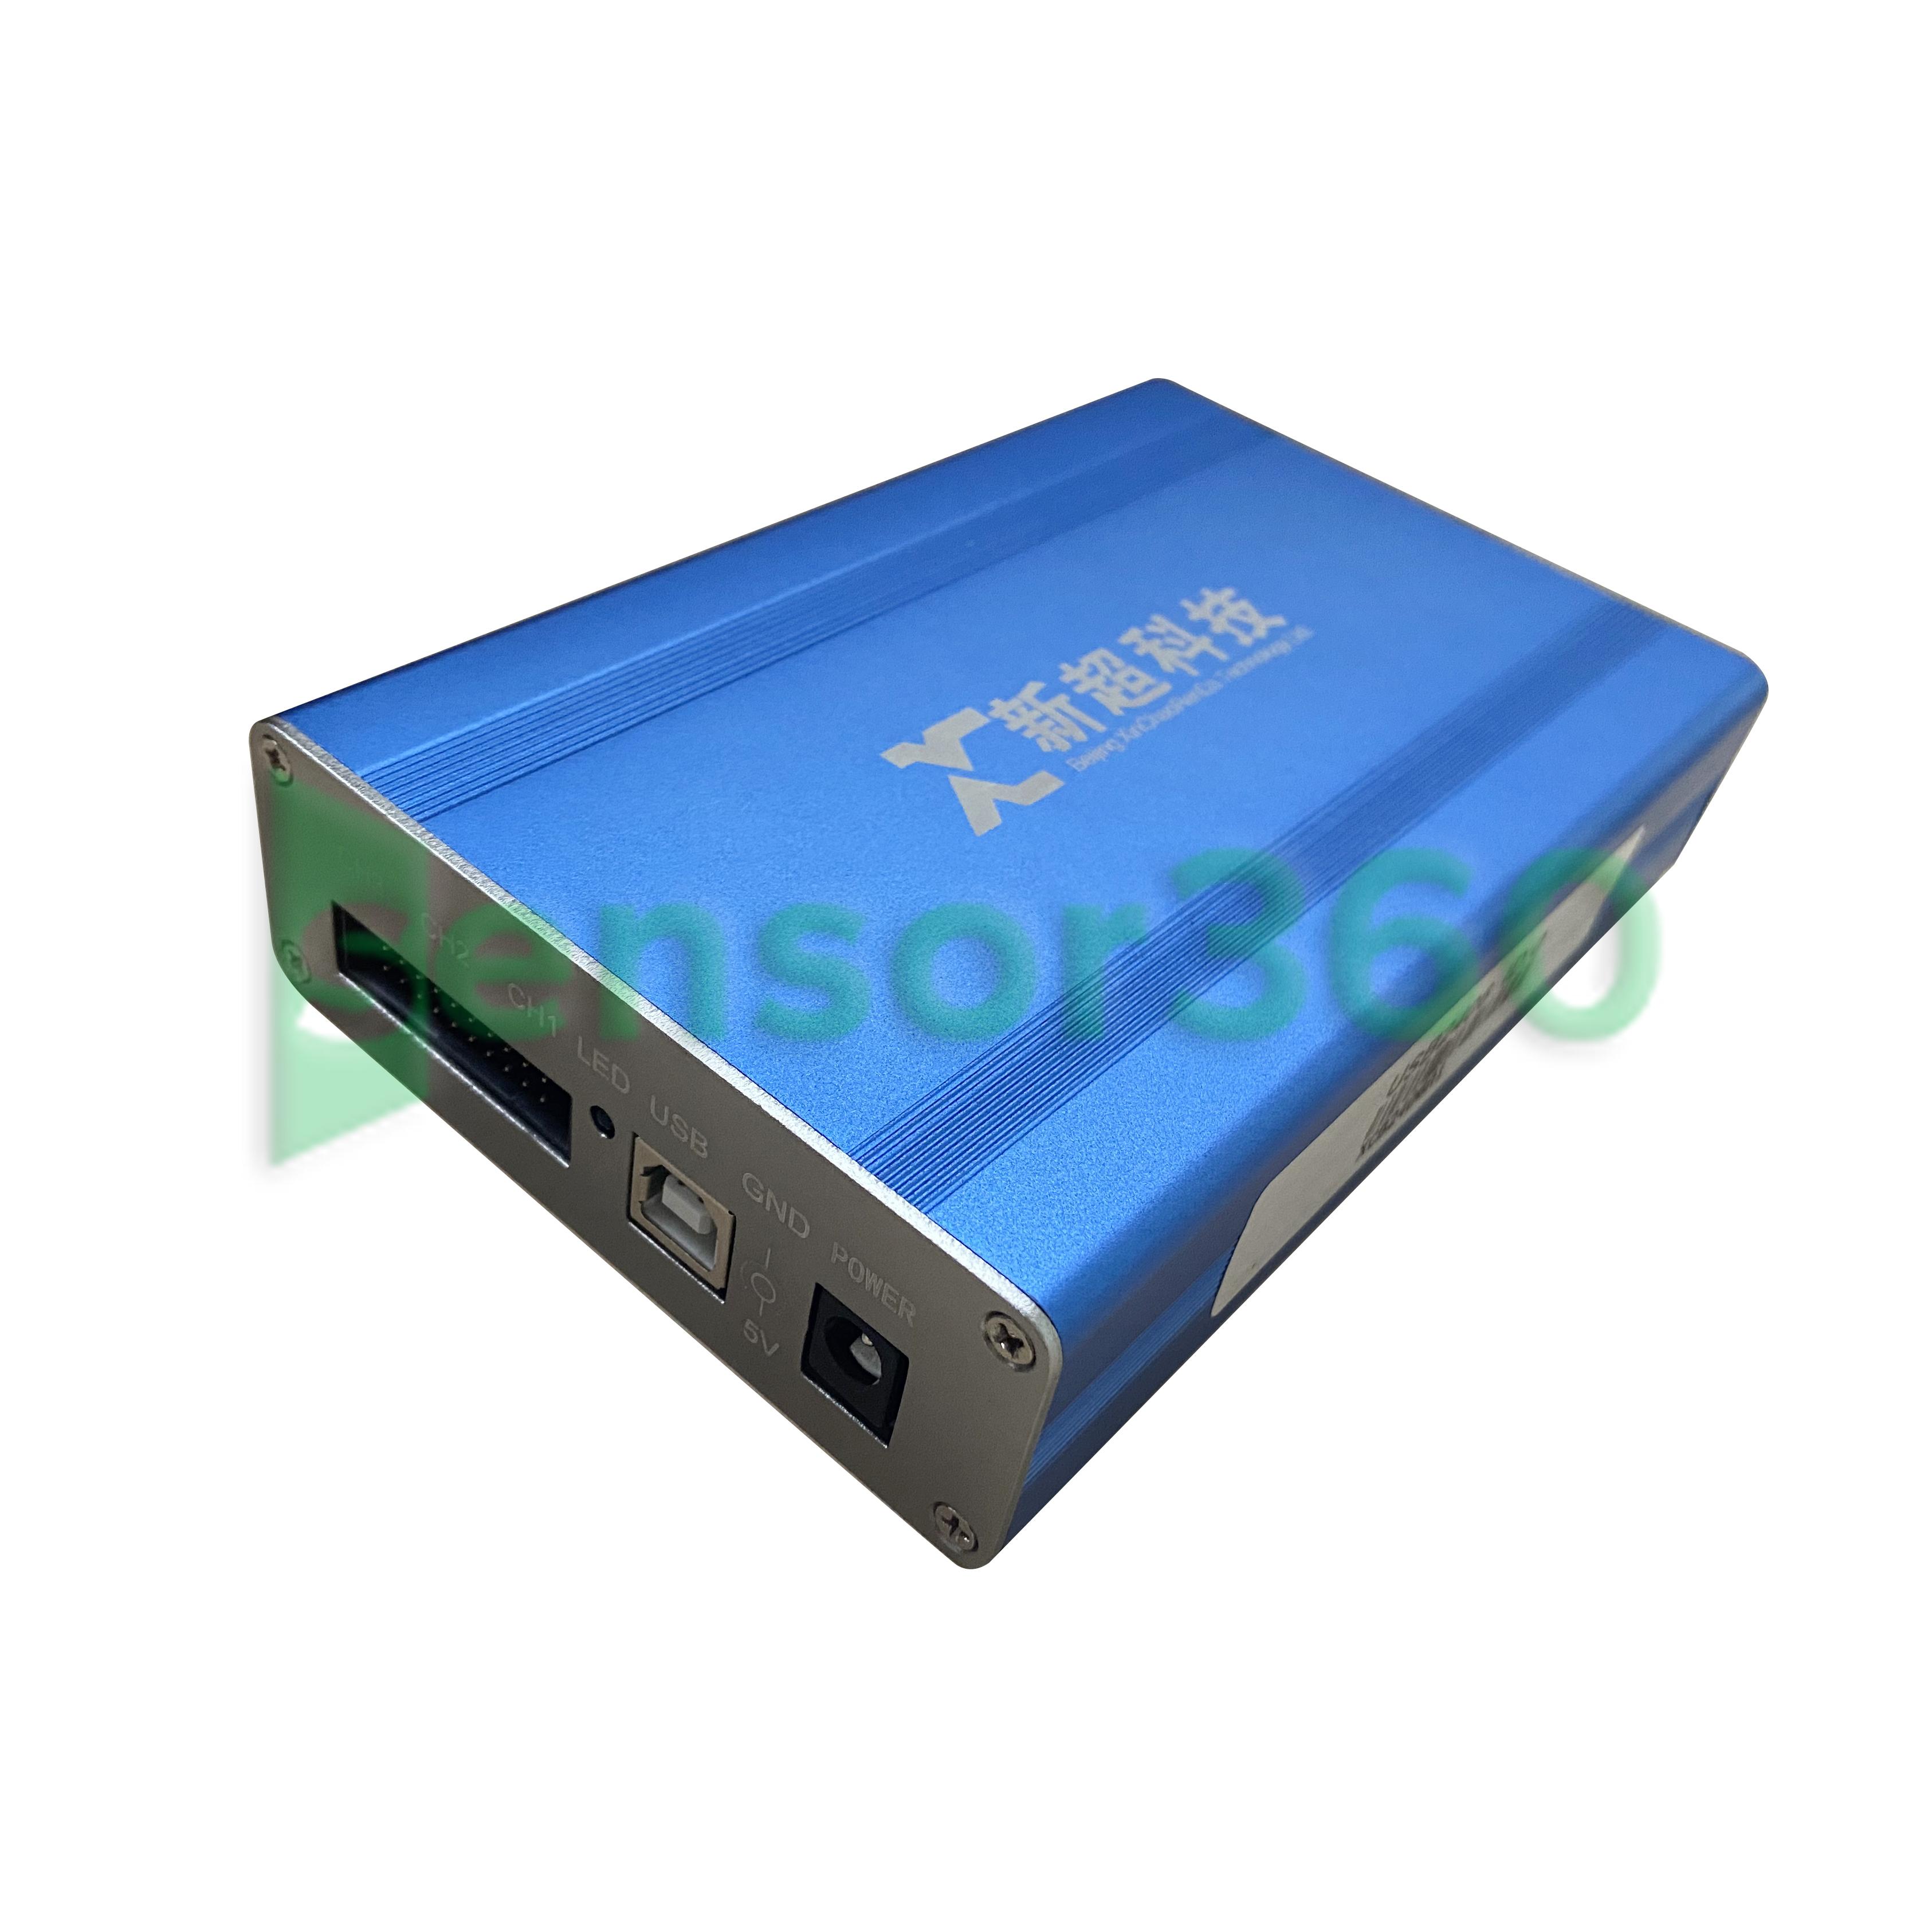 Vibration noise collector USB-2406